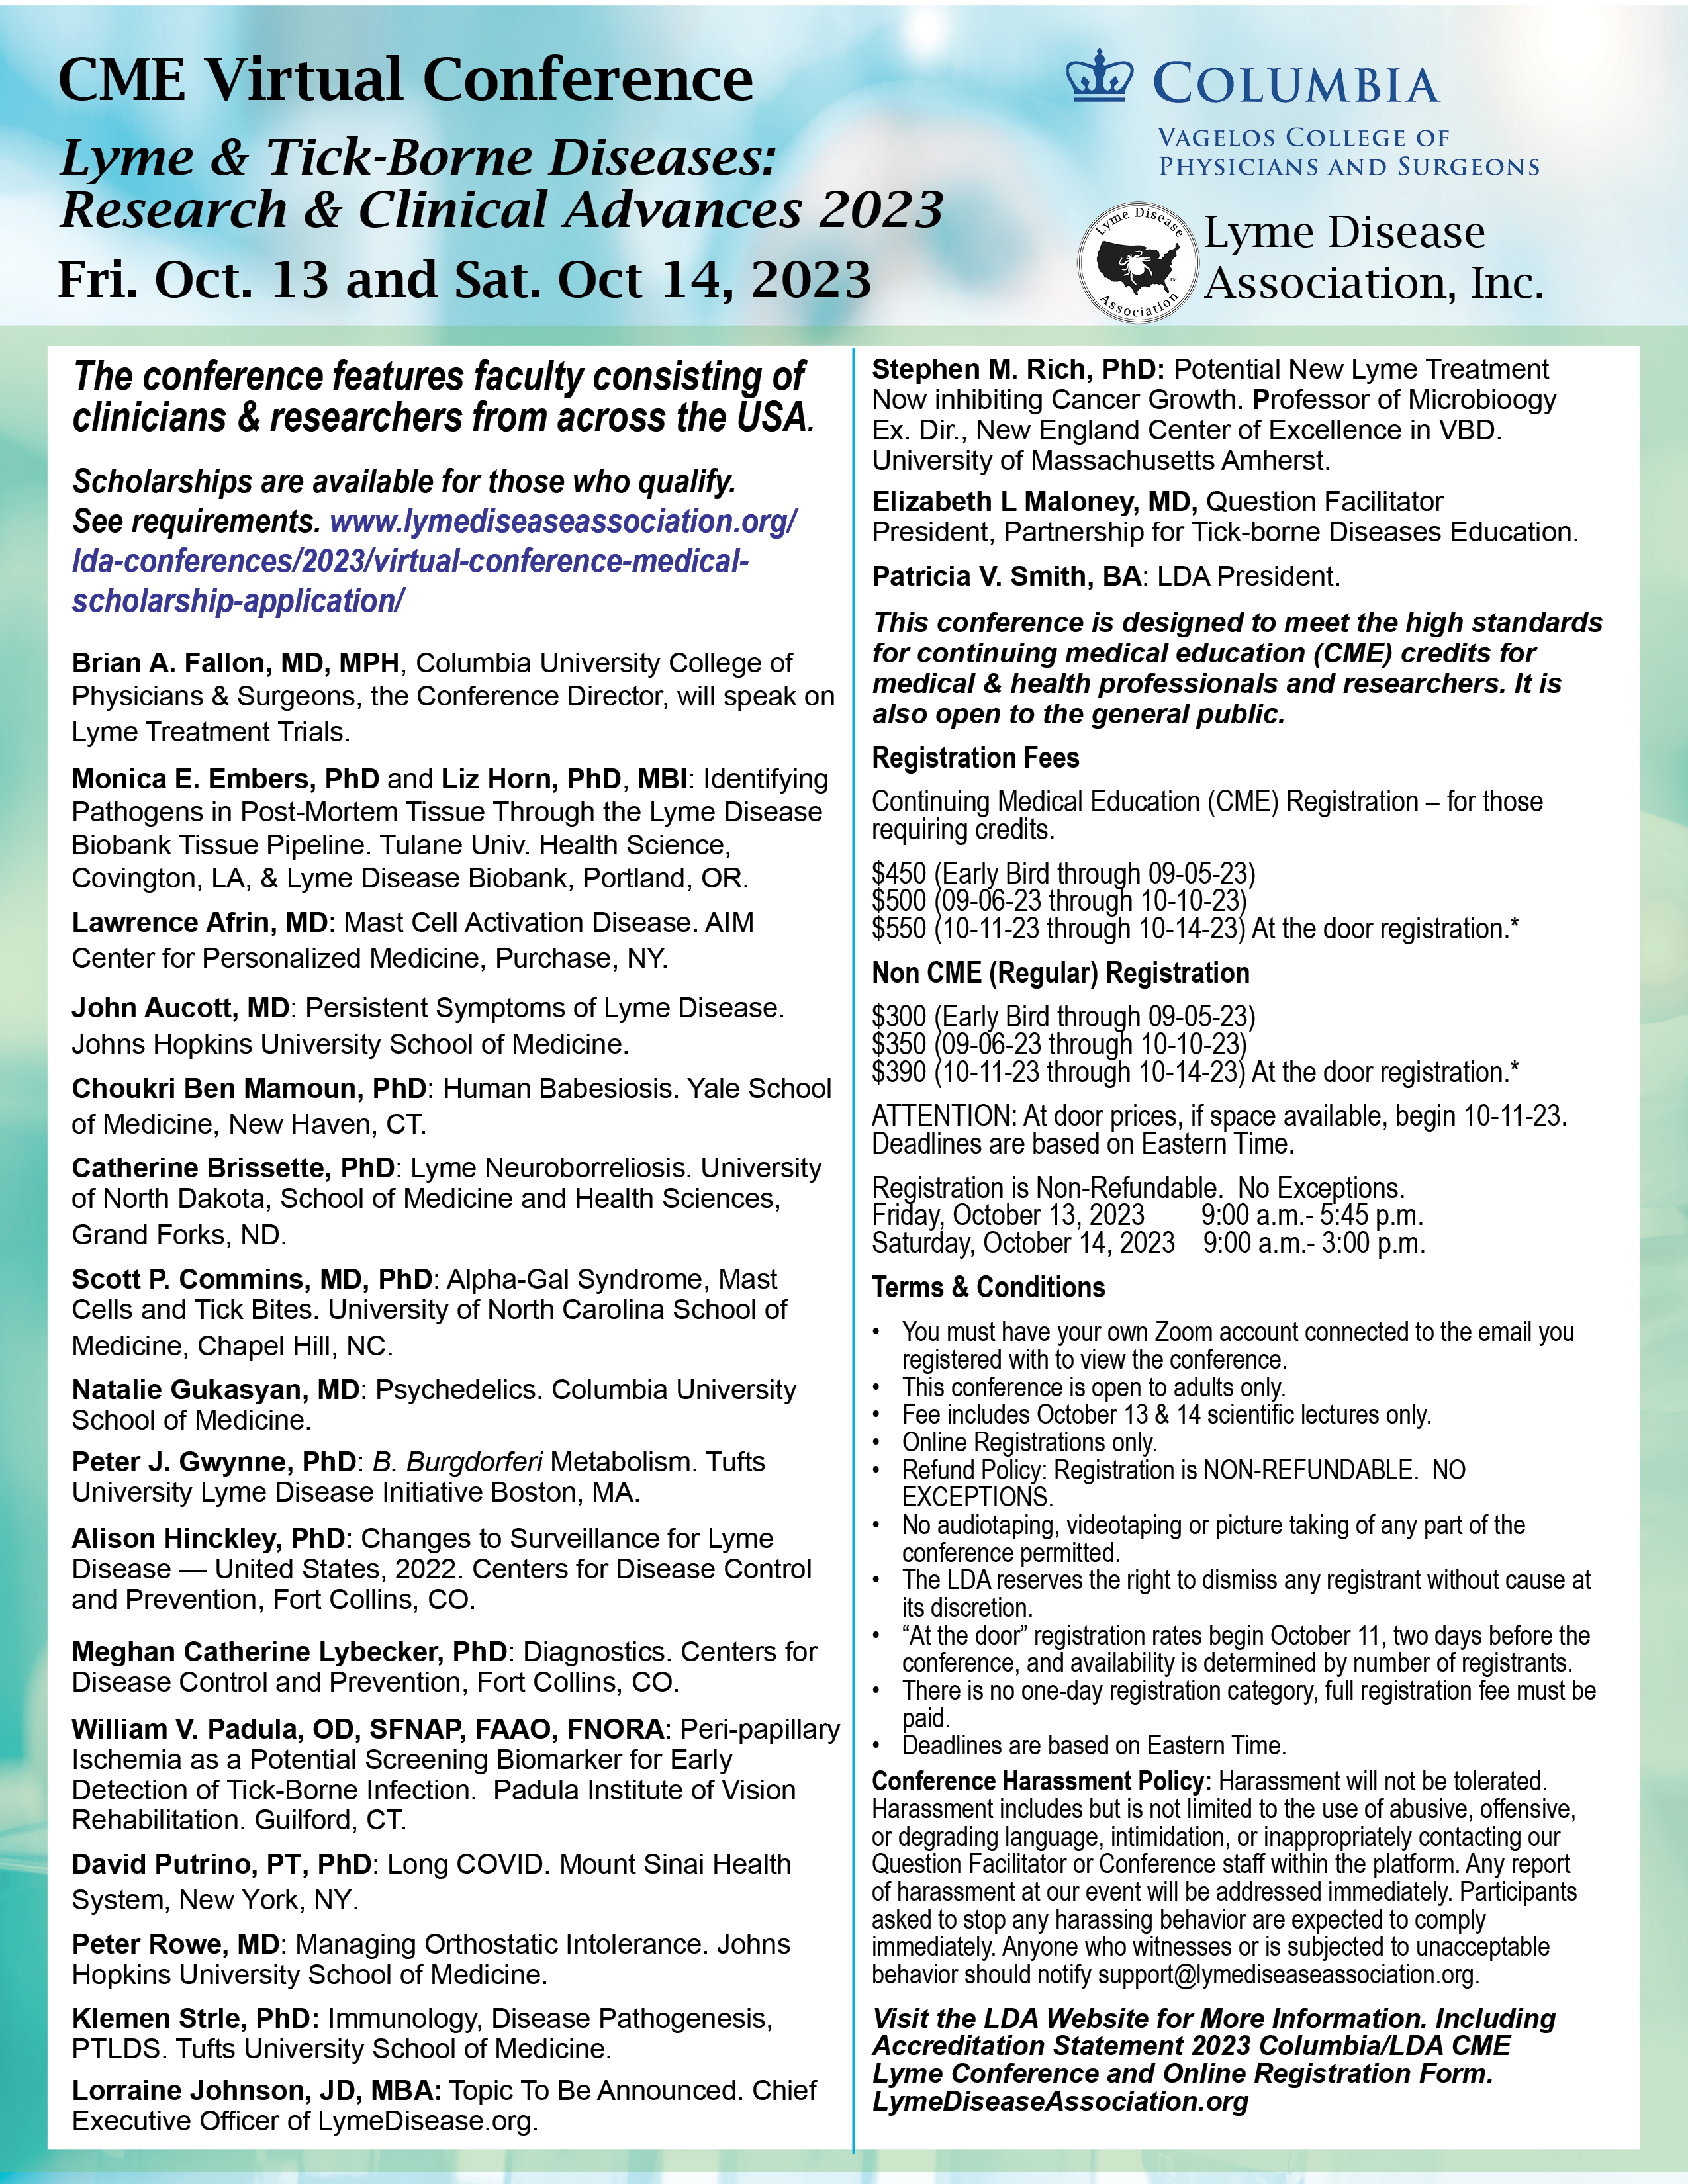 2023 Lyme Disease Association-Columbia Virtual Conference